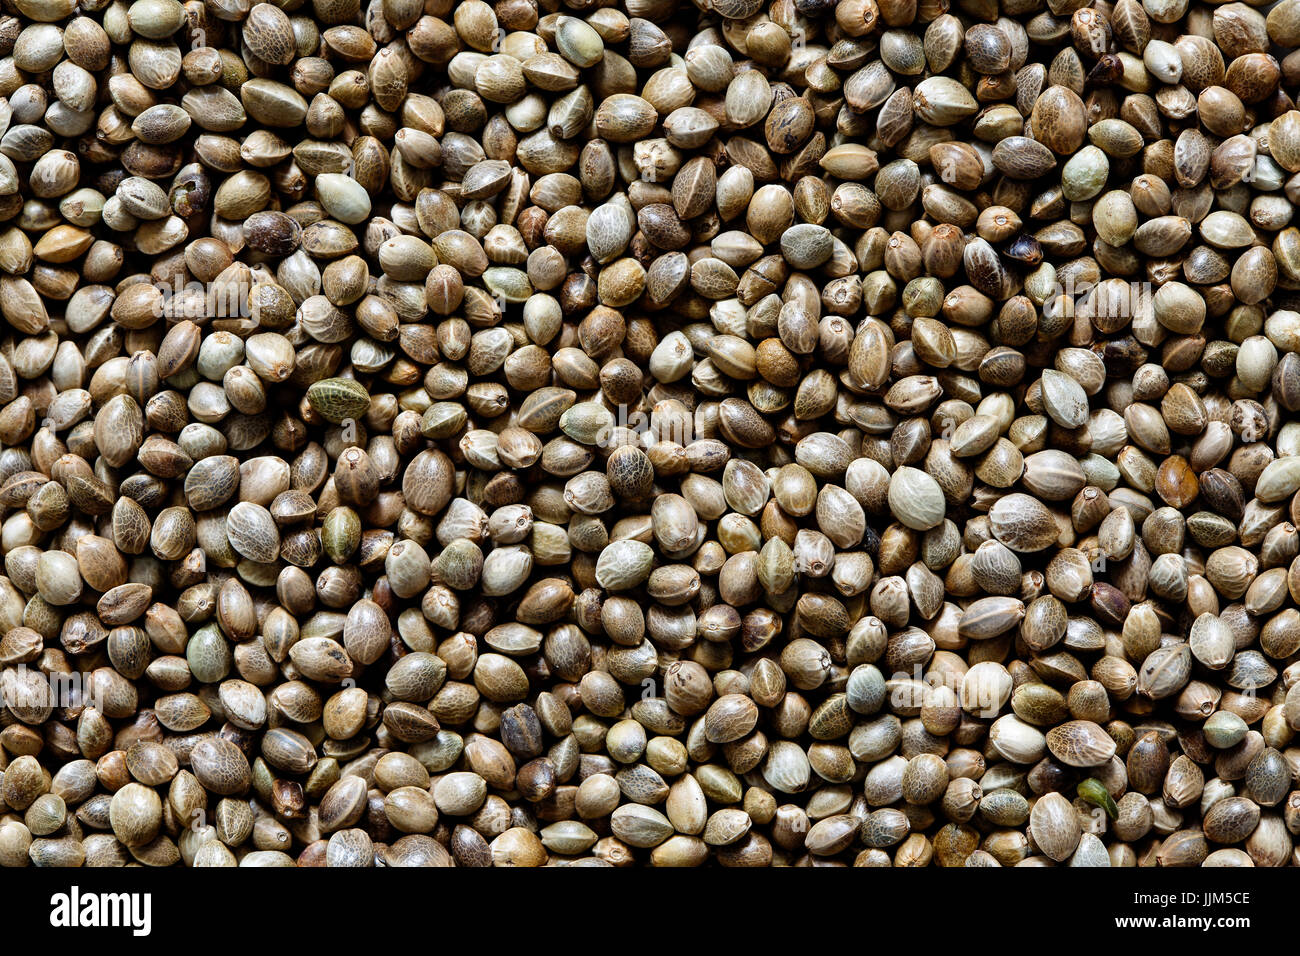 Background of hemp seeds. Stock Photo